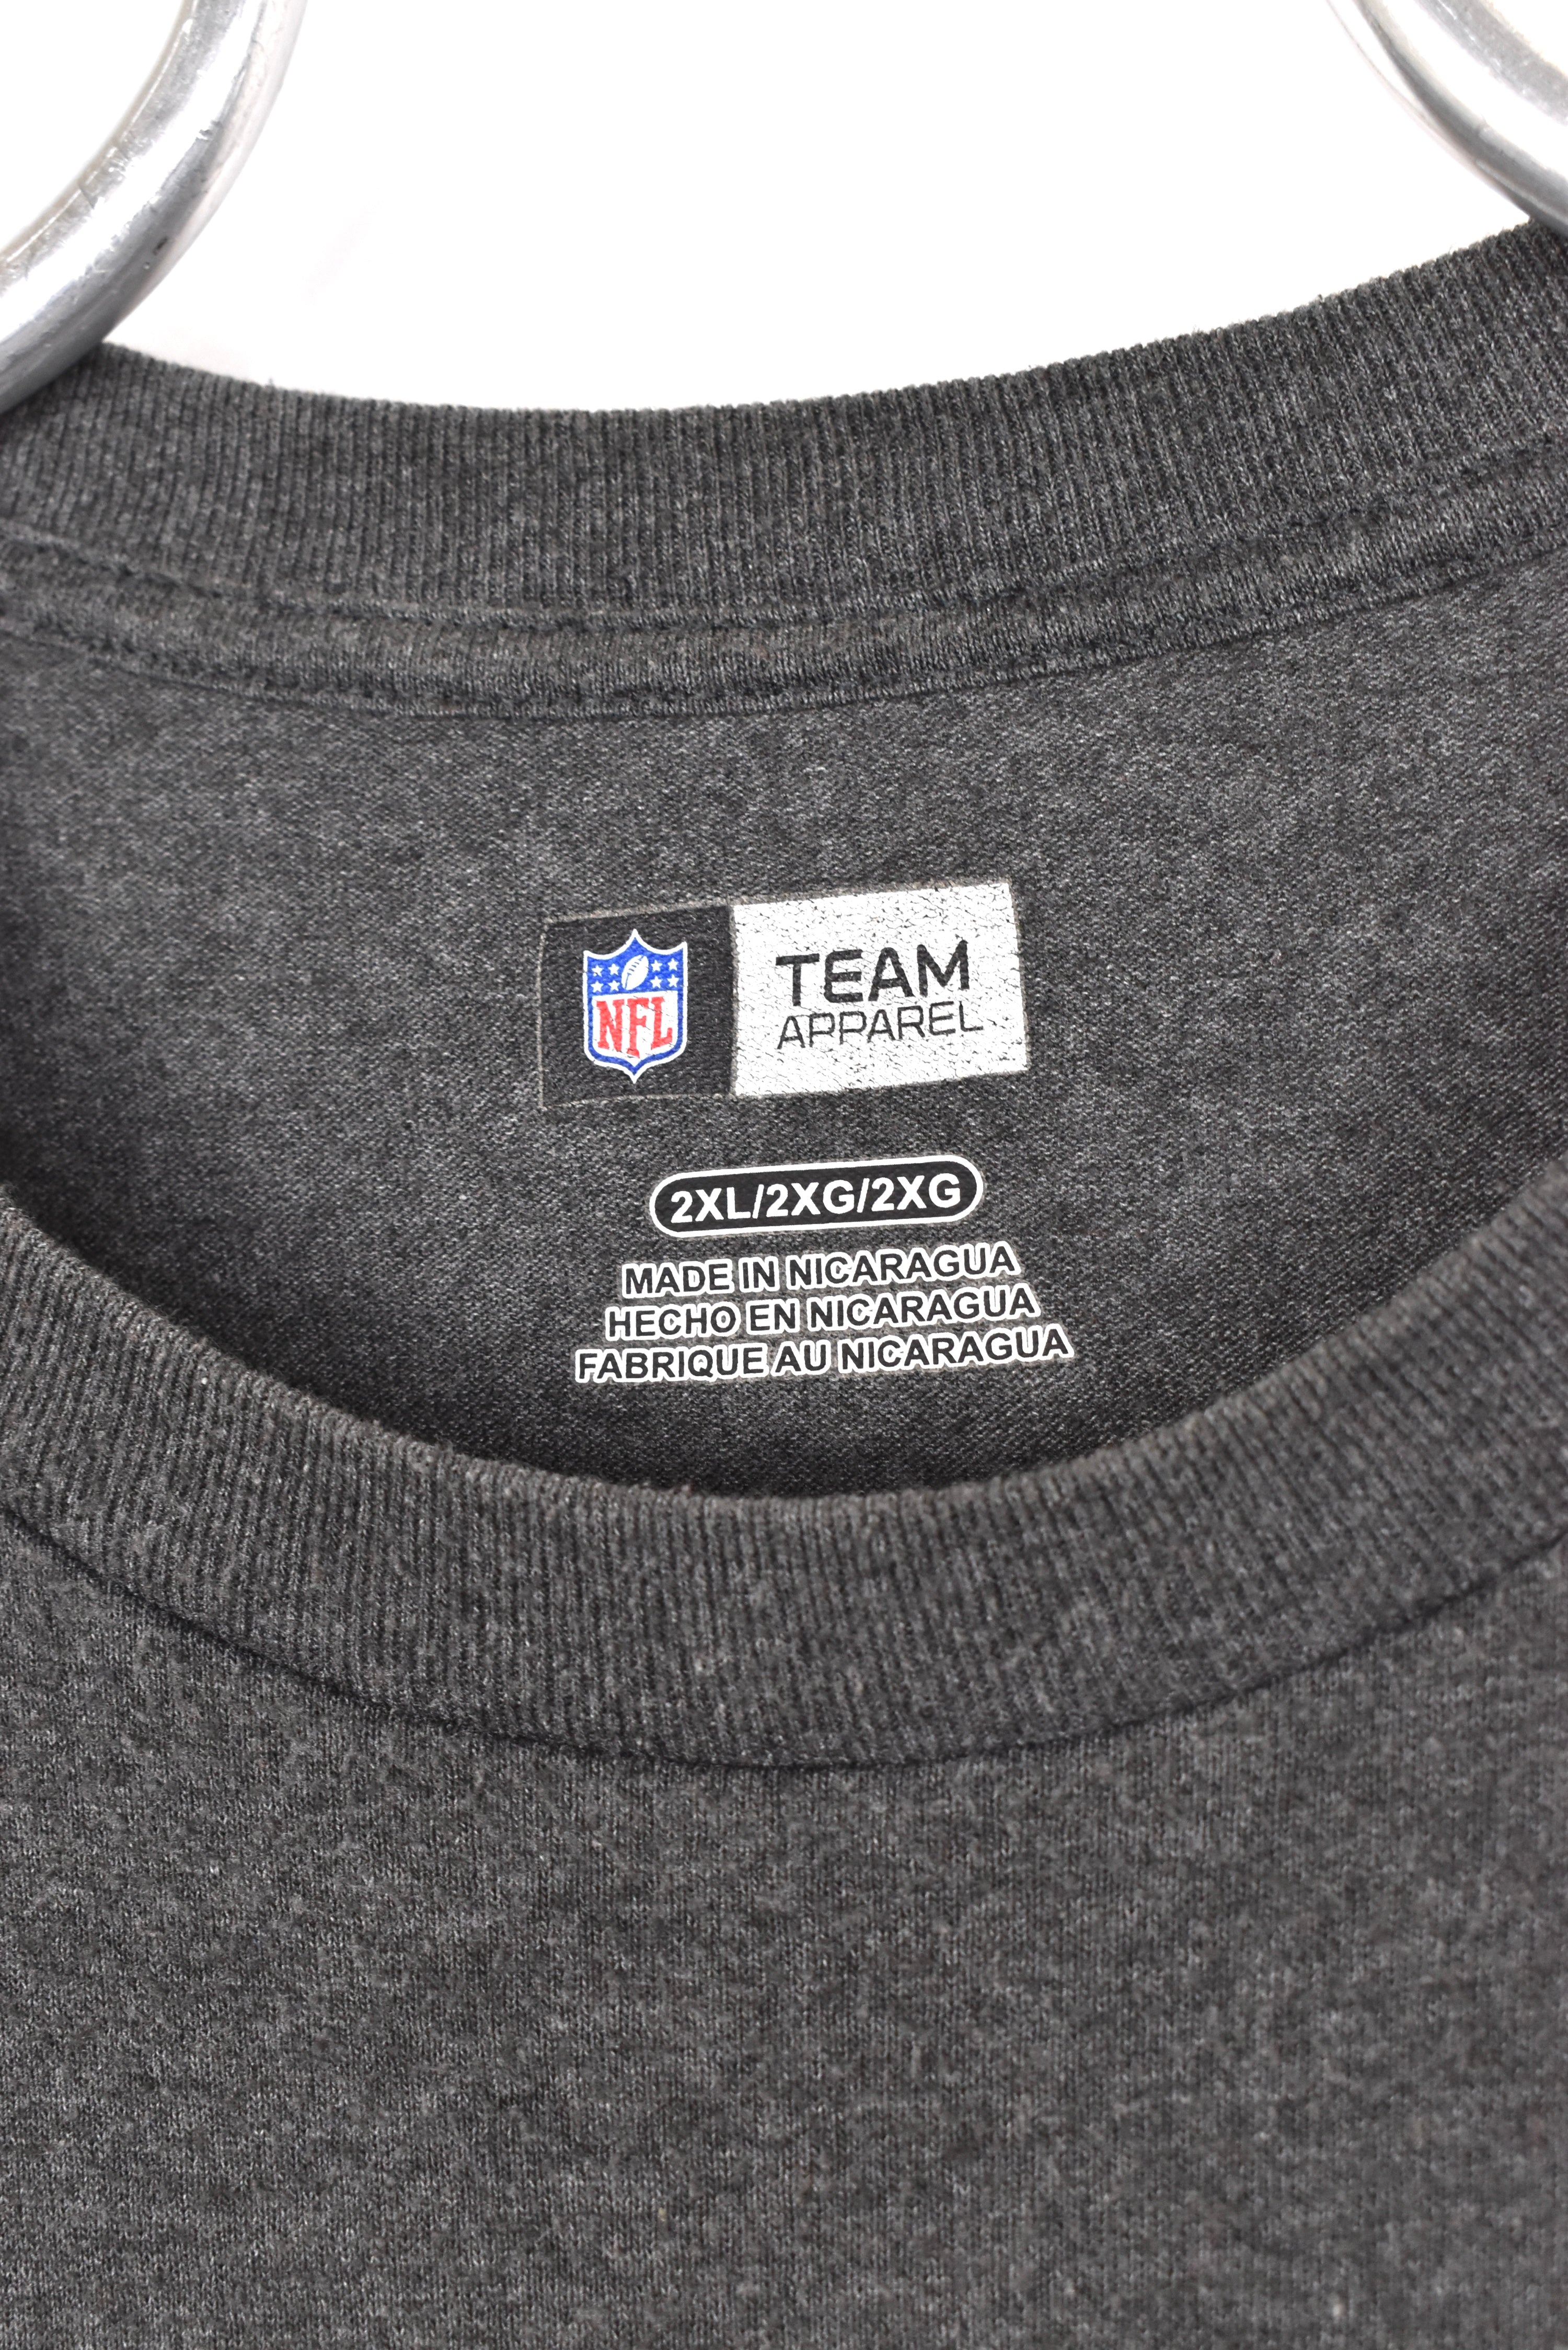 Vintage Chicago Bears shirt, NFL grey graphic tee - AU XXL PRO SPORT